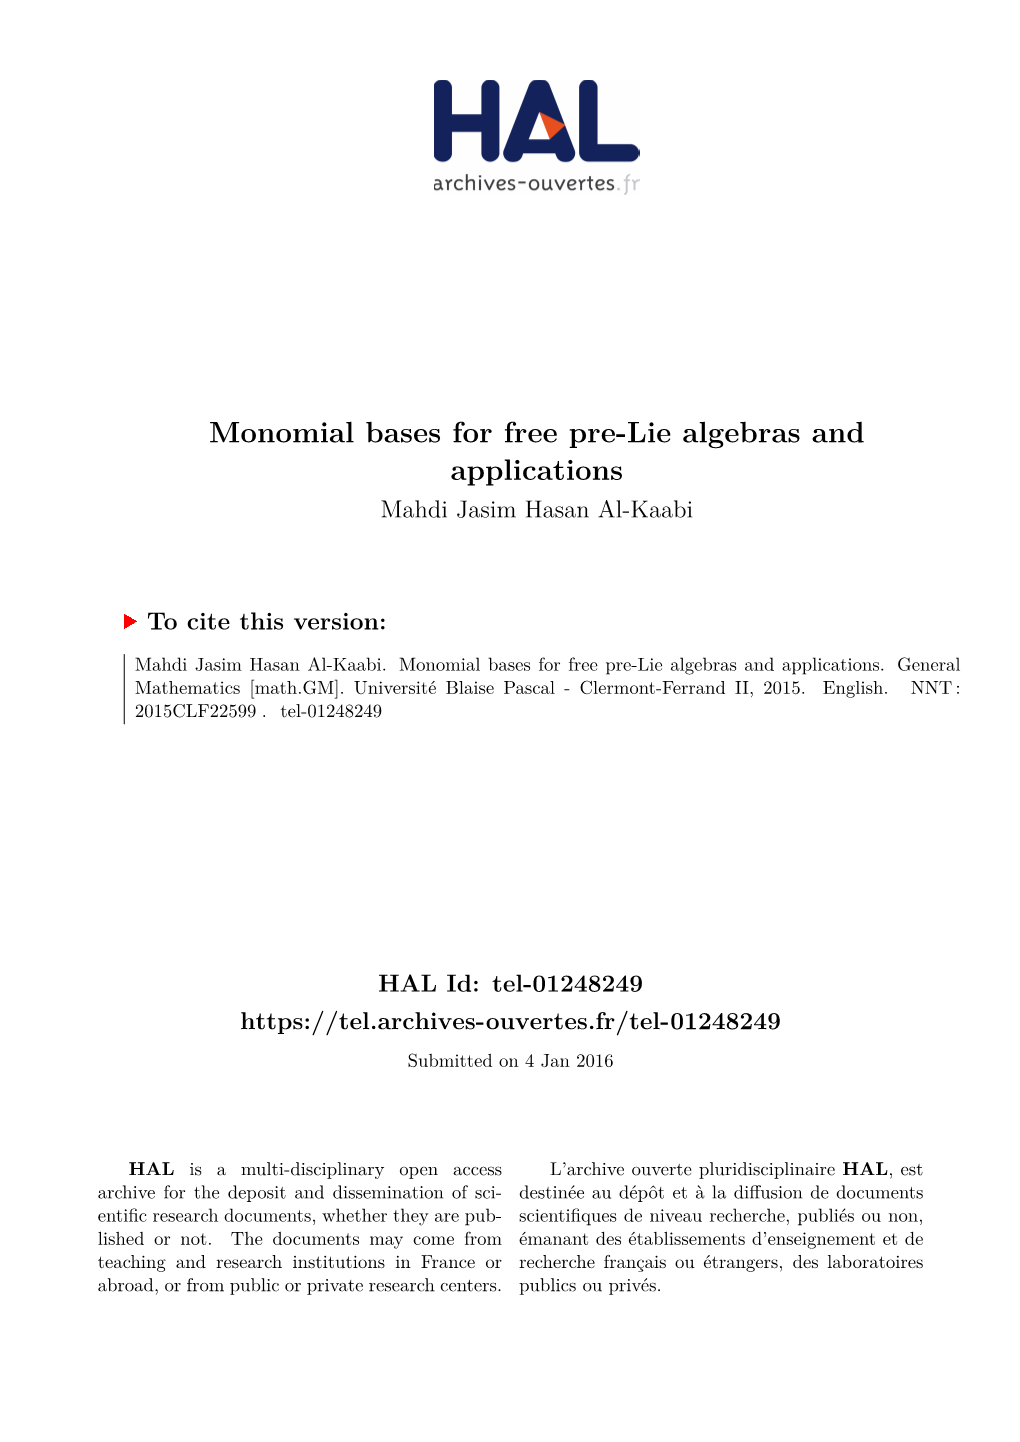 Monomial Bases for Free Pre-Lie Algebras and Applications Mahdi Jasim Hasan Al-Kaabi